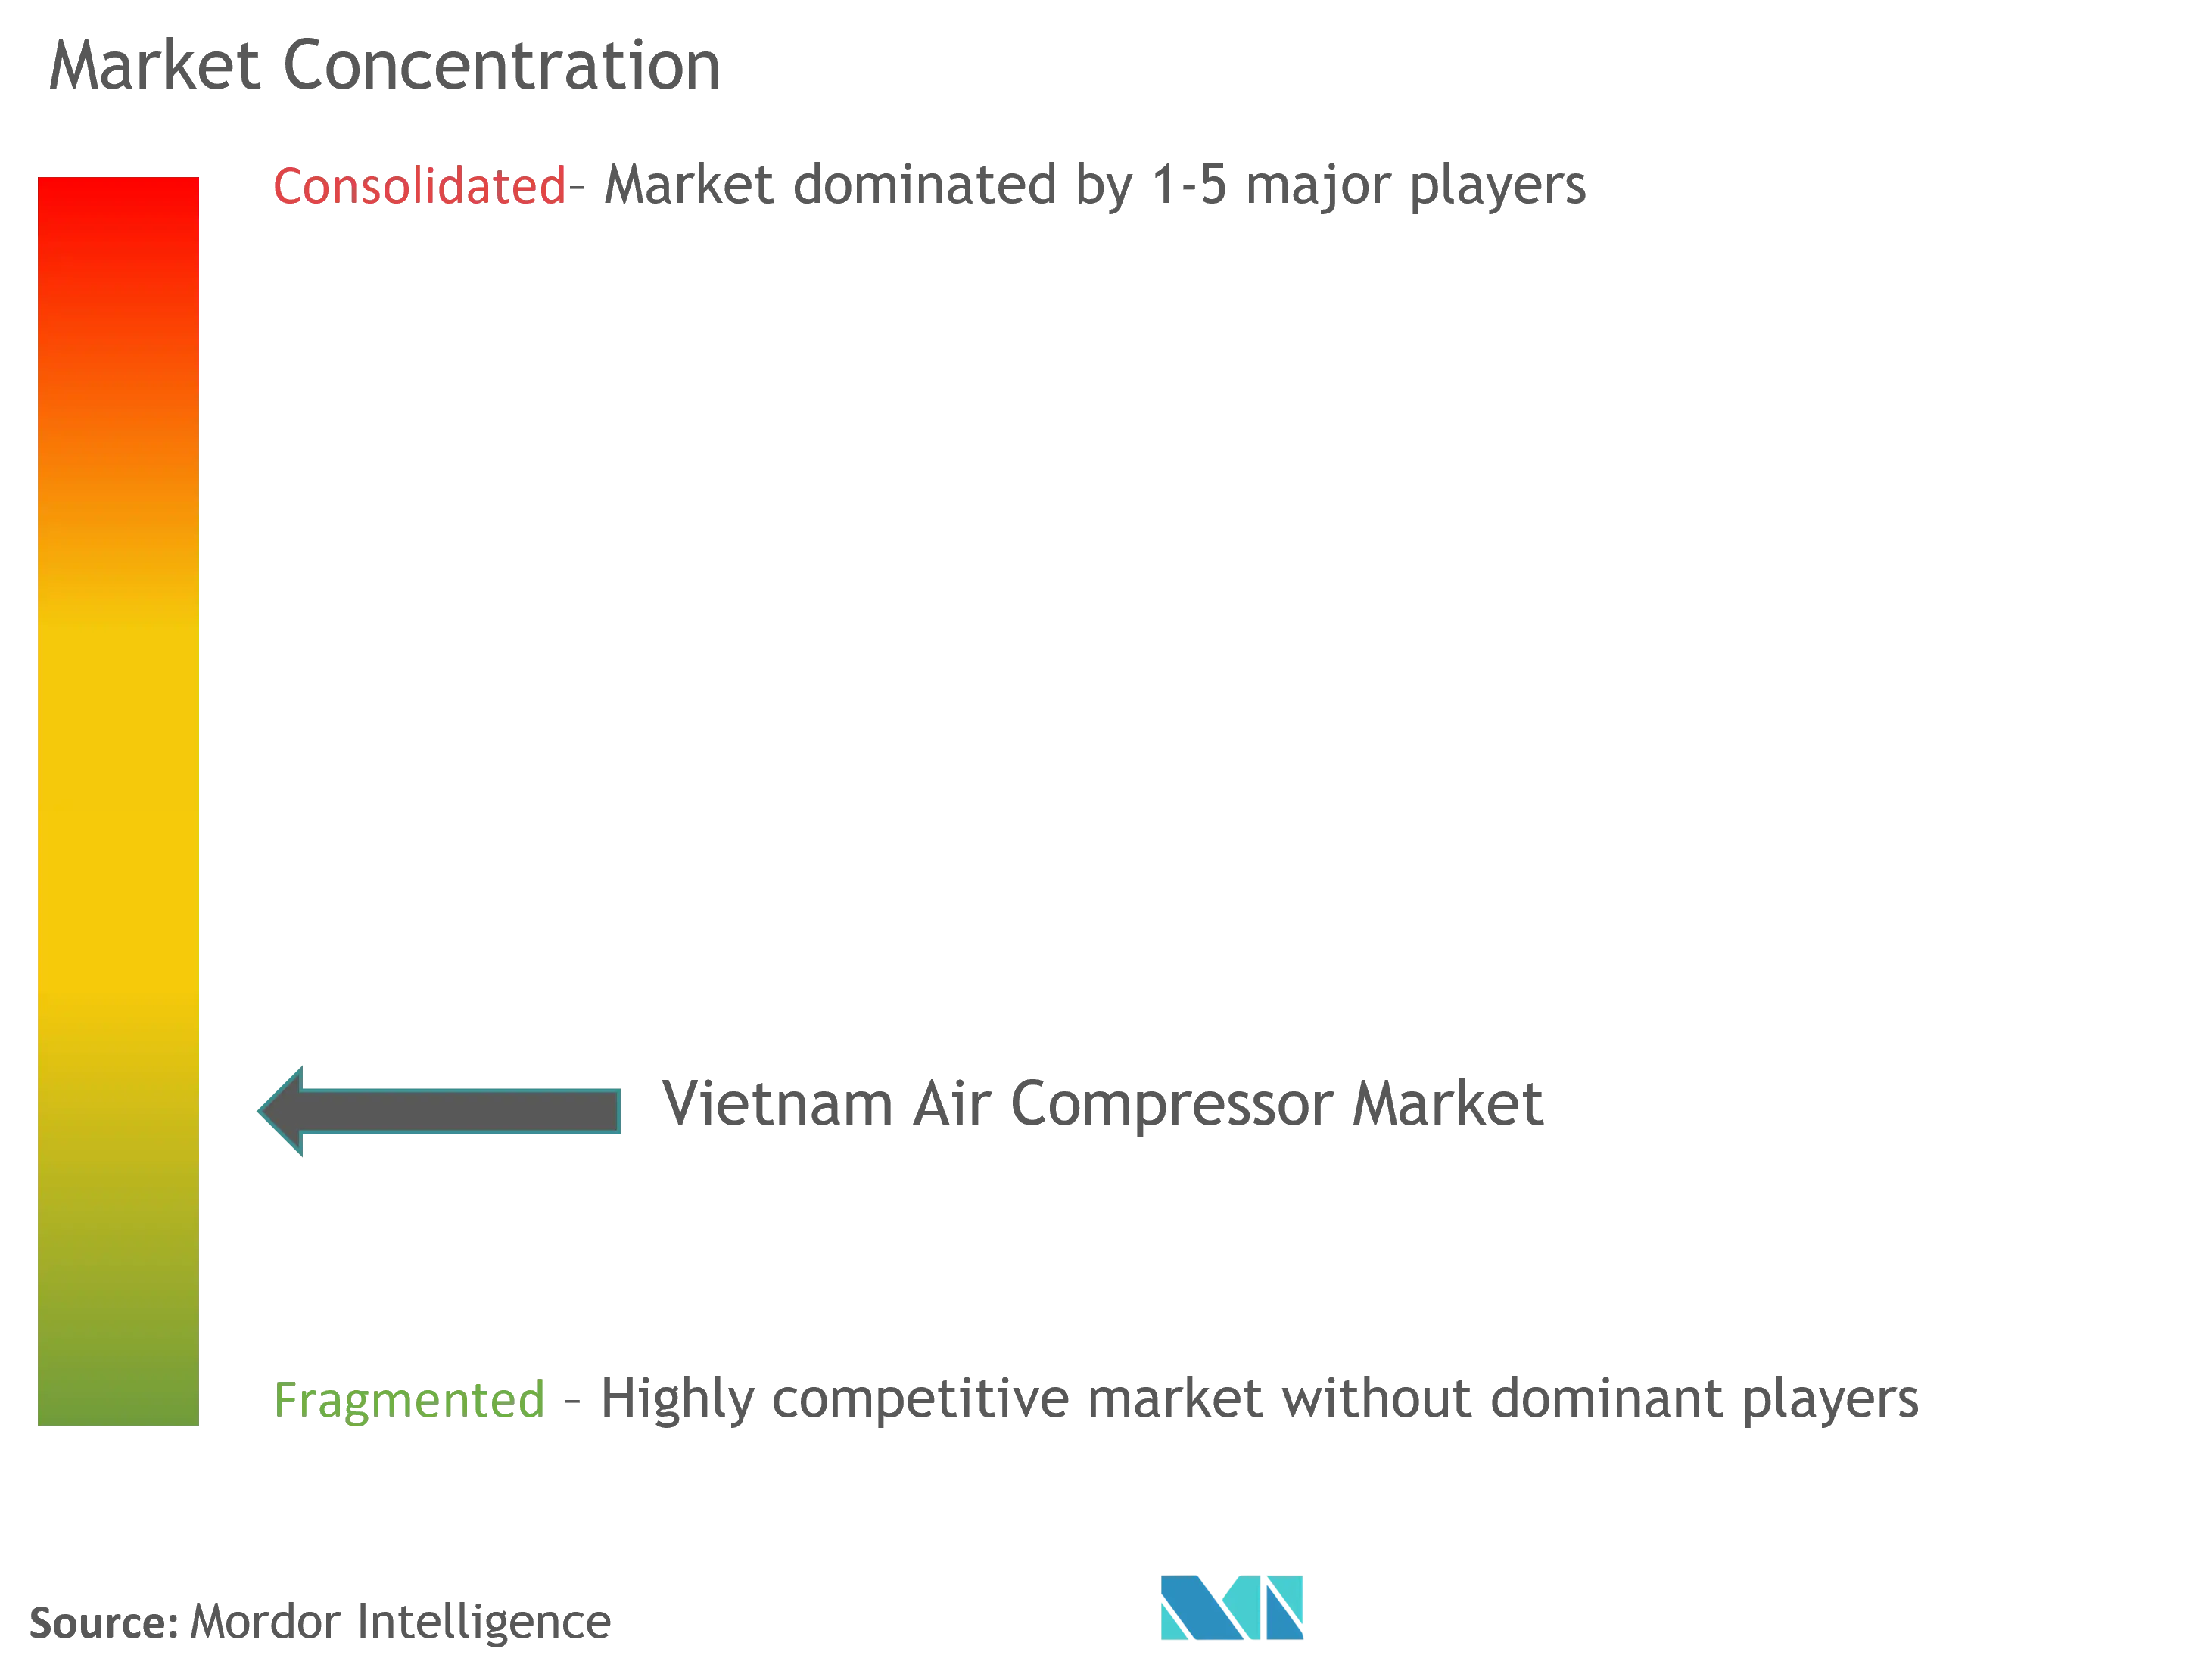 Vietnam Air Compressor Market Concentration